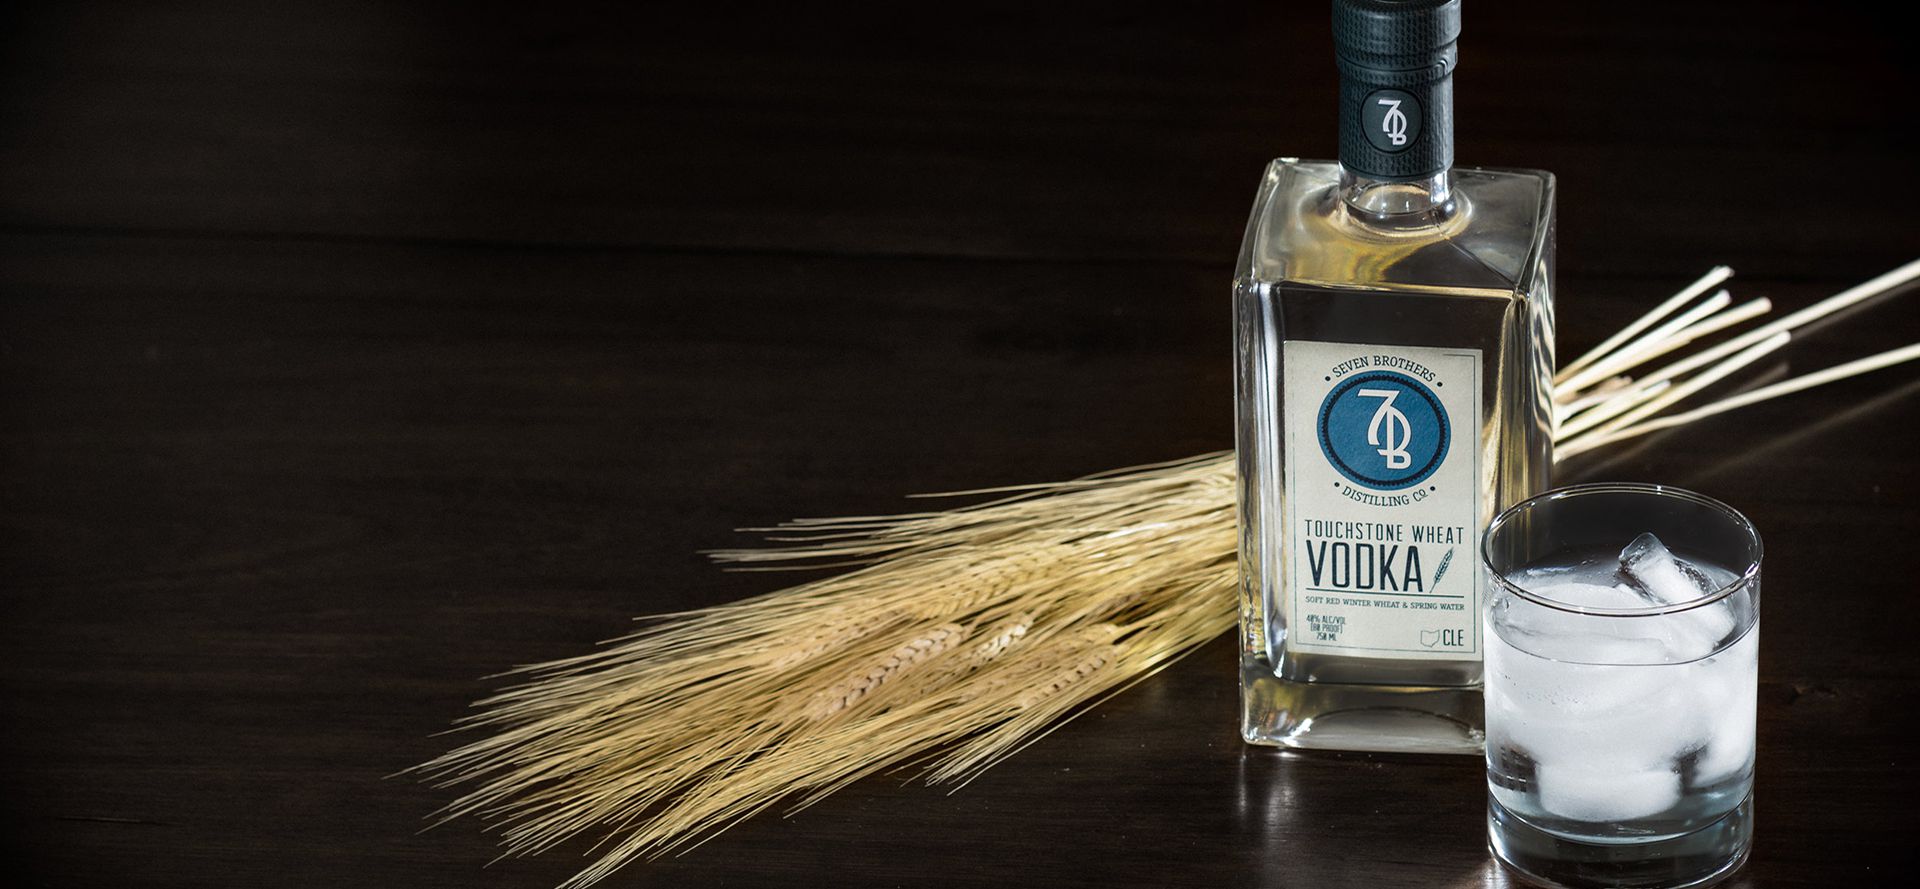 Touchstone Wheat Vodka.